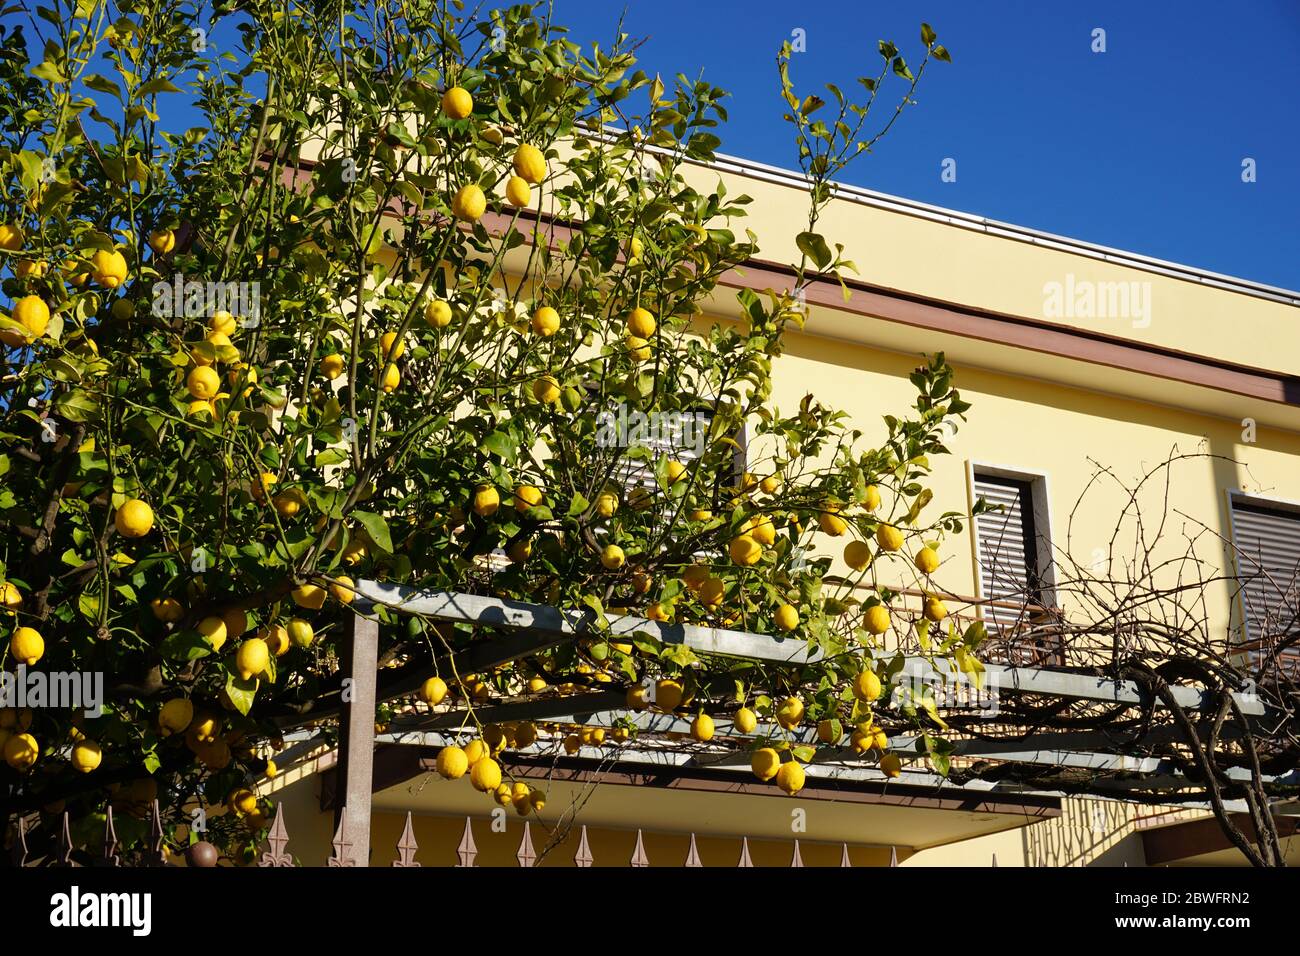 A lemon tree in front of a house, taken near Agropoli, Campania, Italy. Zitronenbaum Zitronen Zitrusfrüchte Citrus Stock Photo